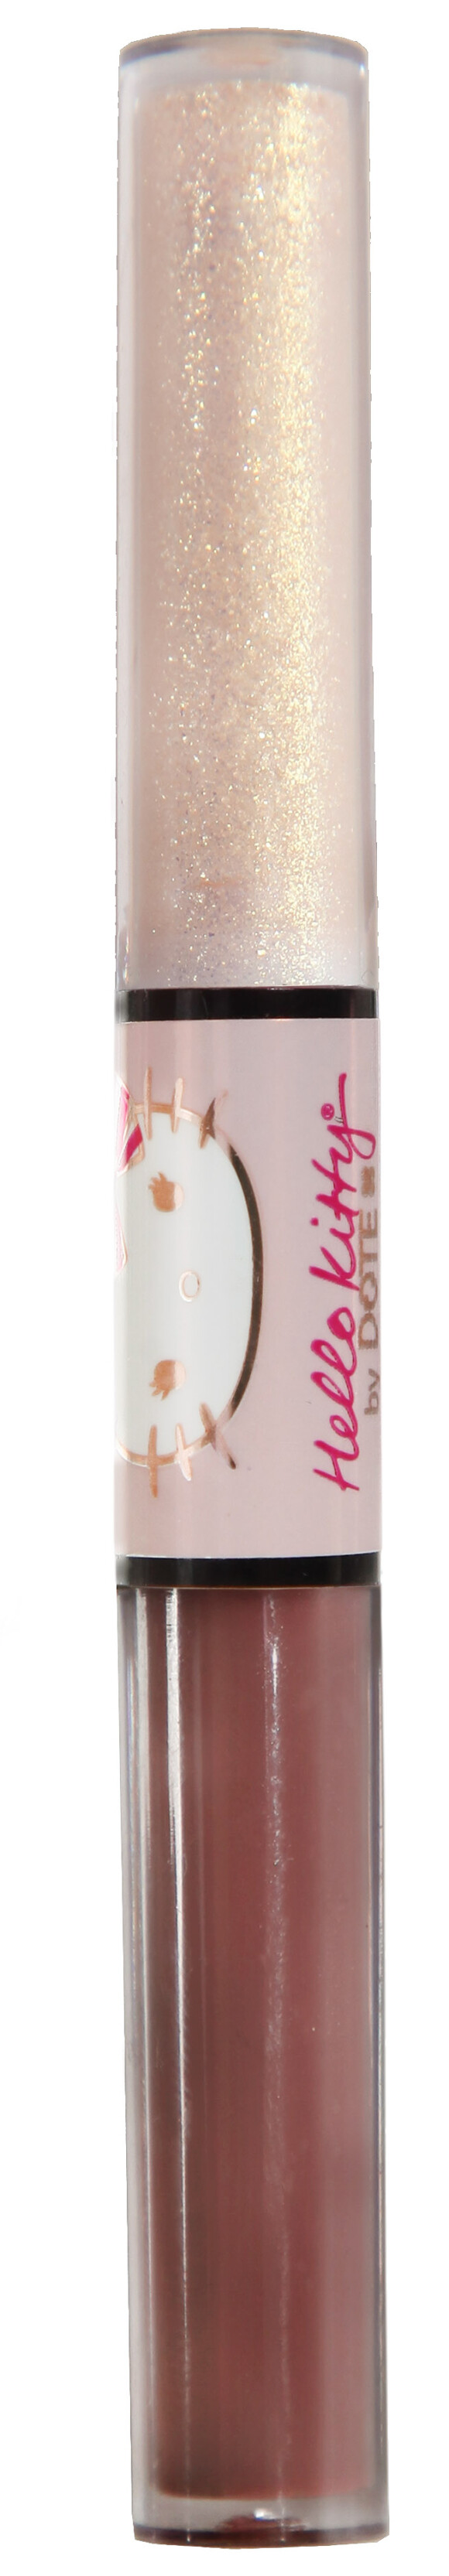 Para ter gloss e mate na mesma embalagem: Duo Batom Líquido Hello Kitty by Dote, R$ 22